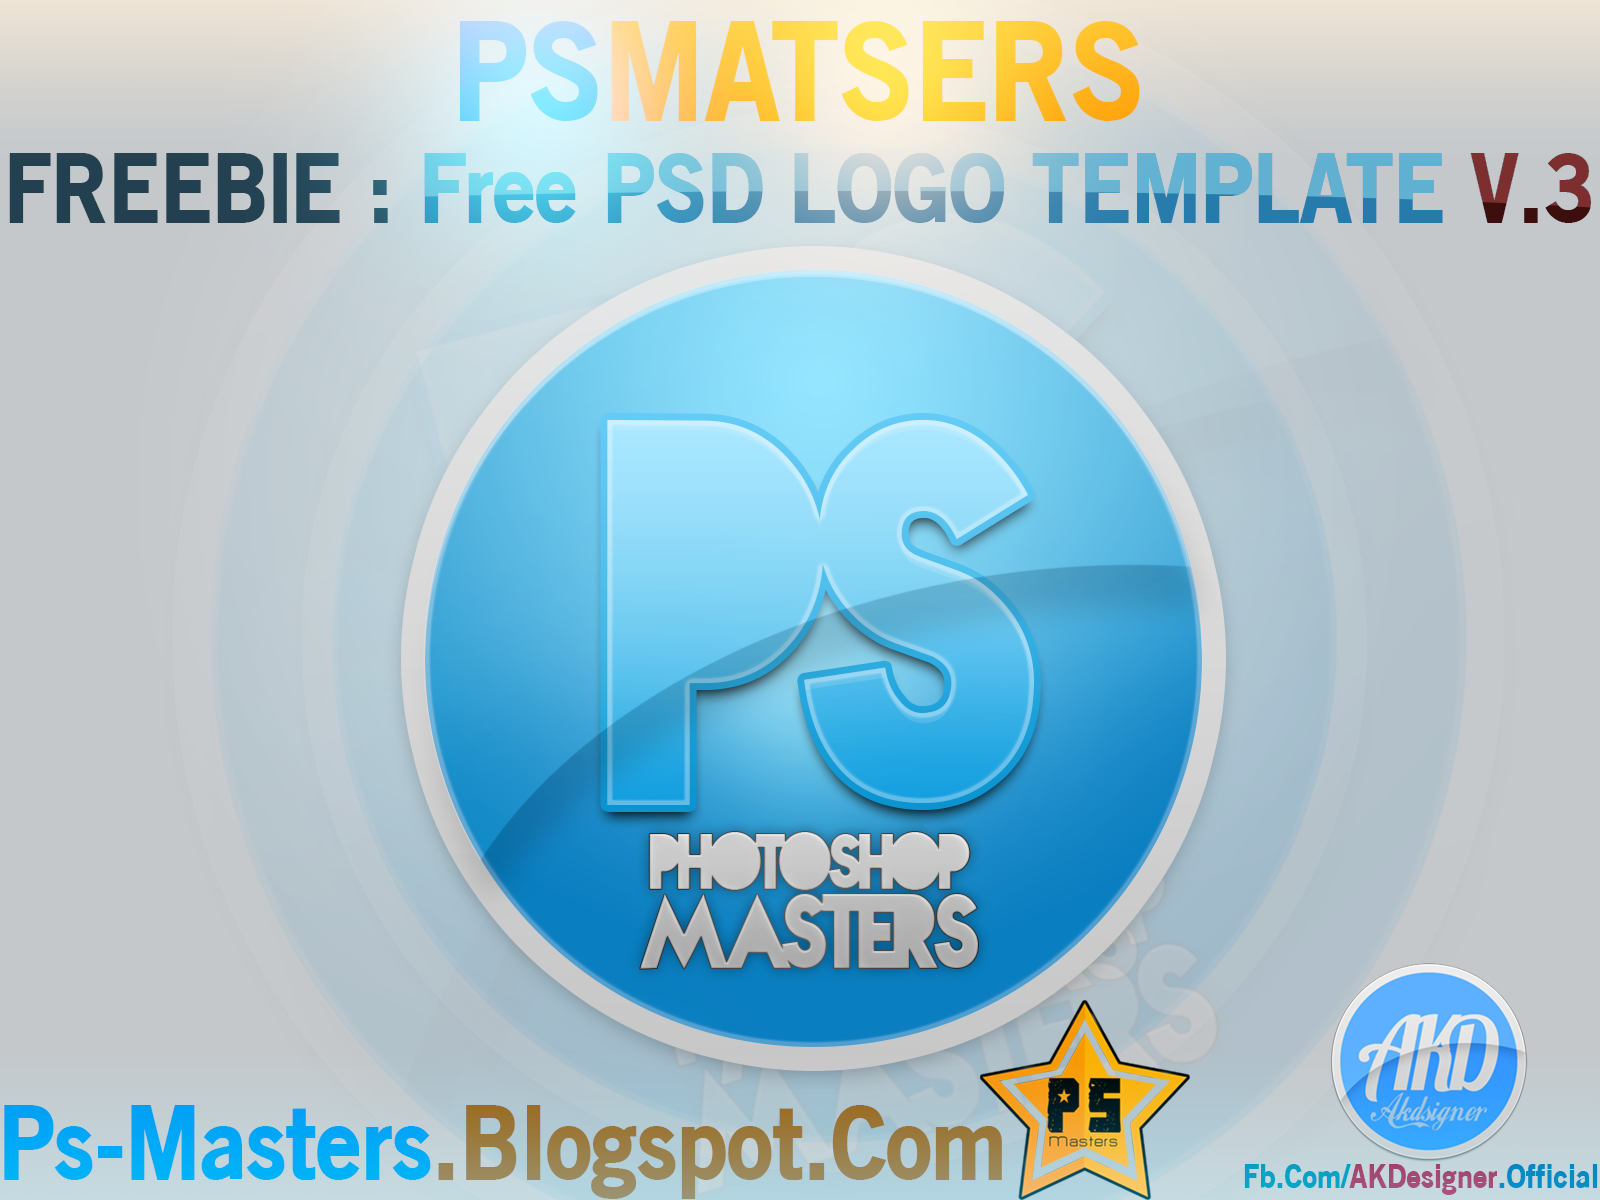 FREEBIE : Free PSD LOGO TEMPLATE V.3 ~Make Your Own LOGO FOR FREE ...